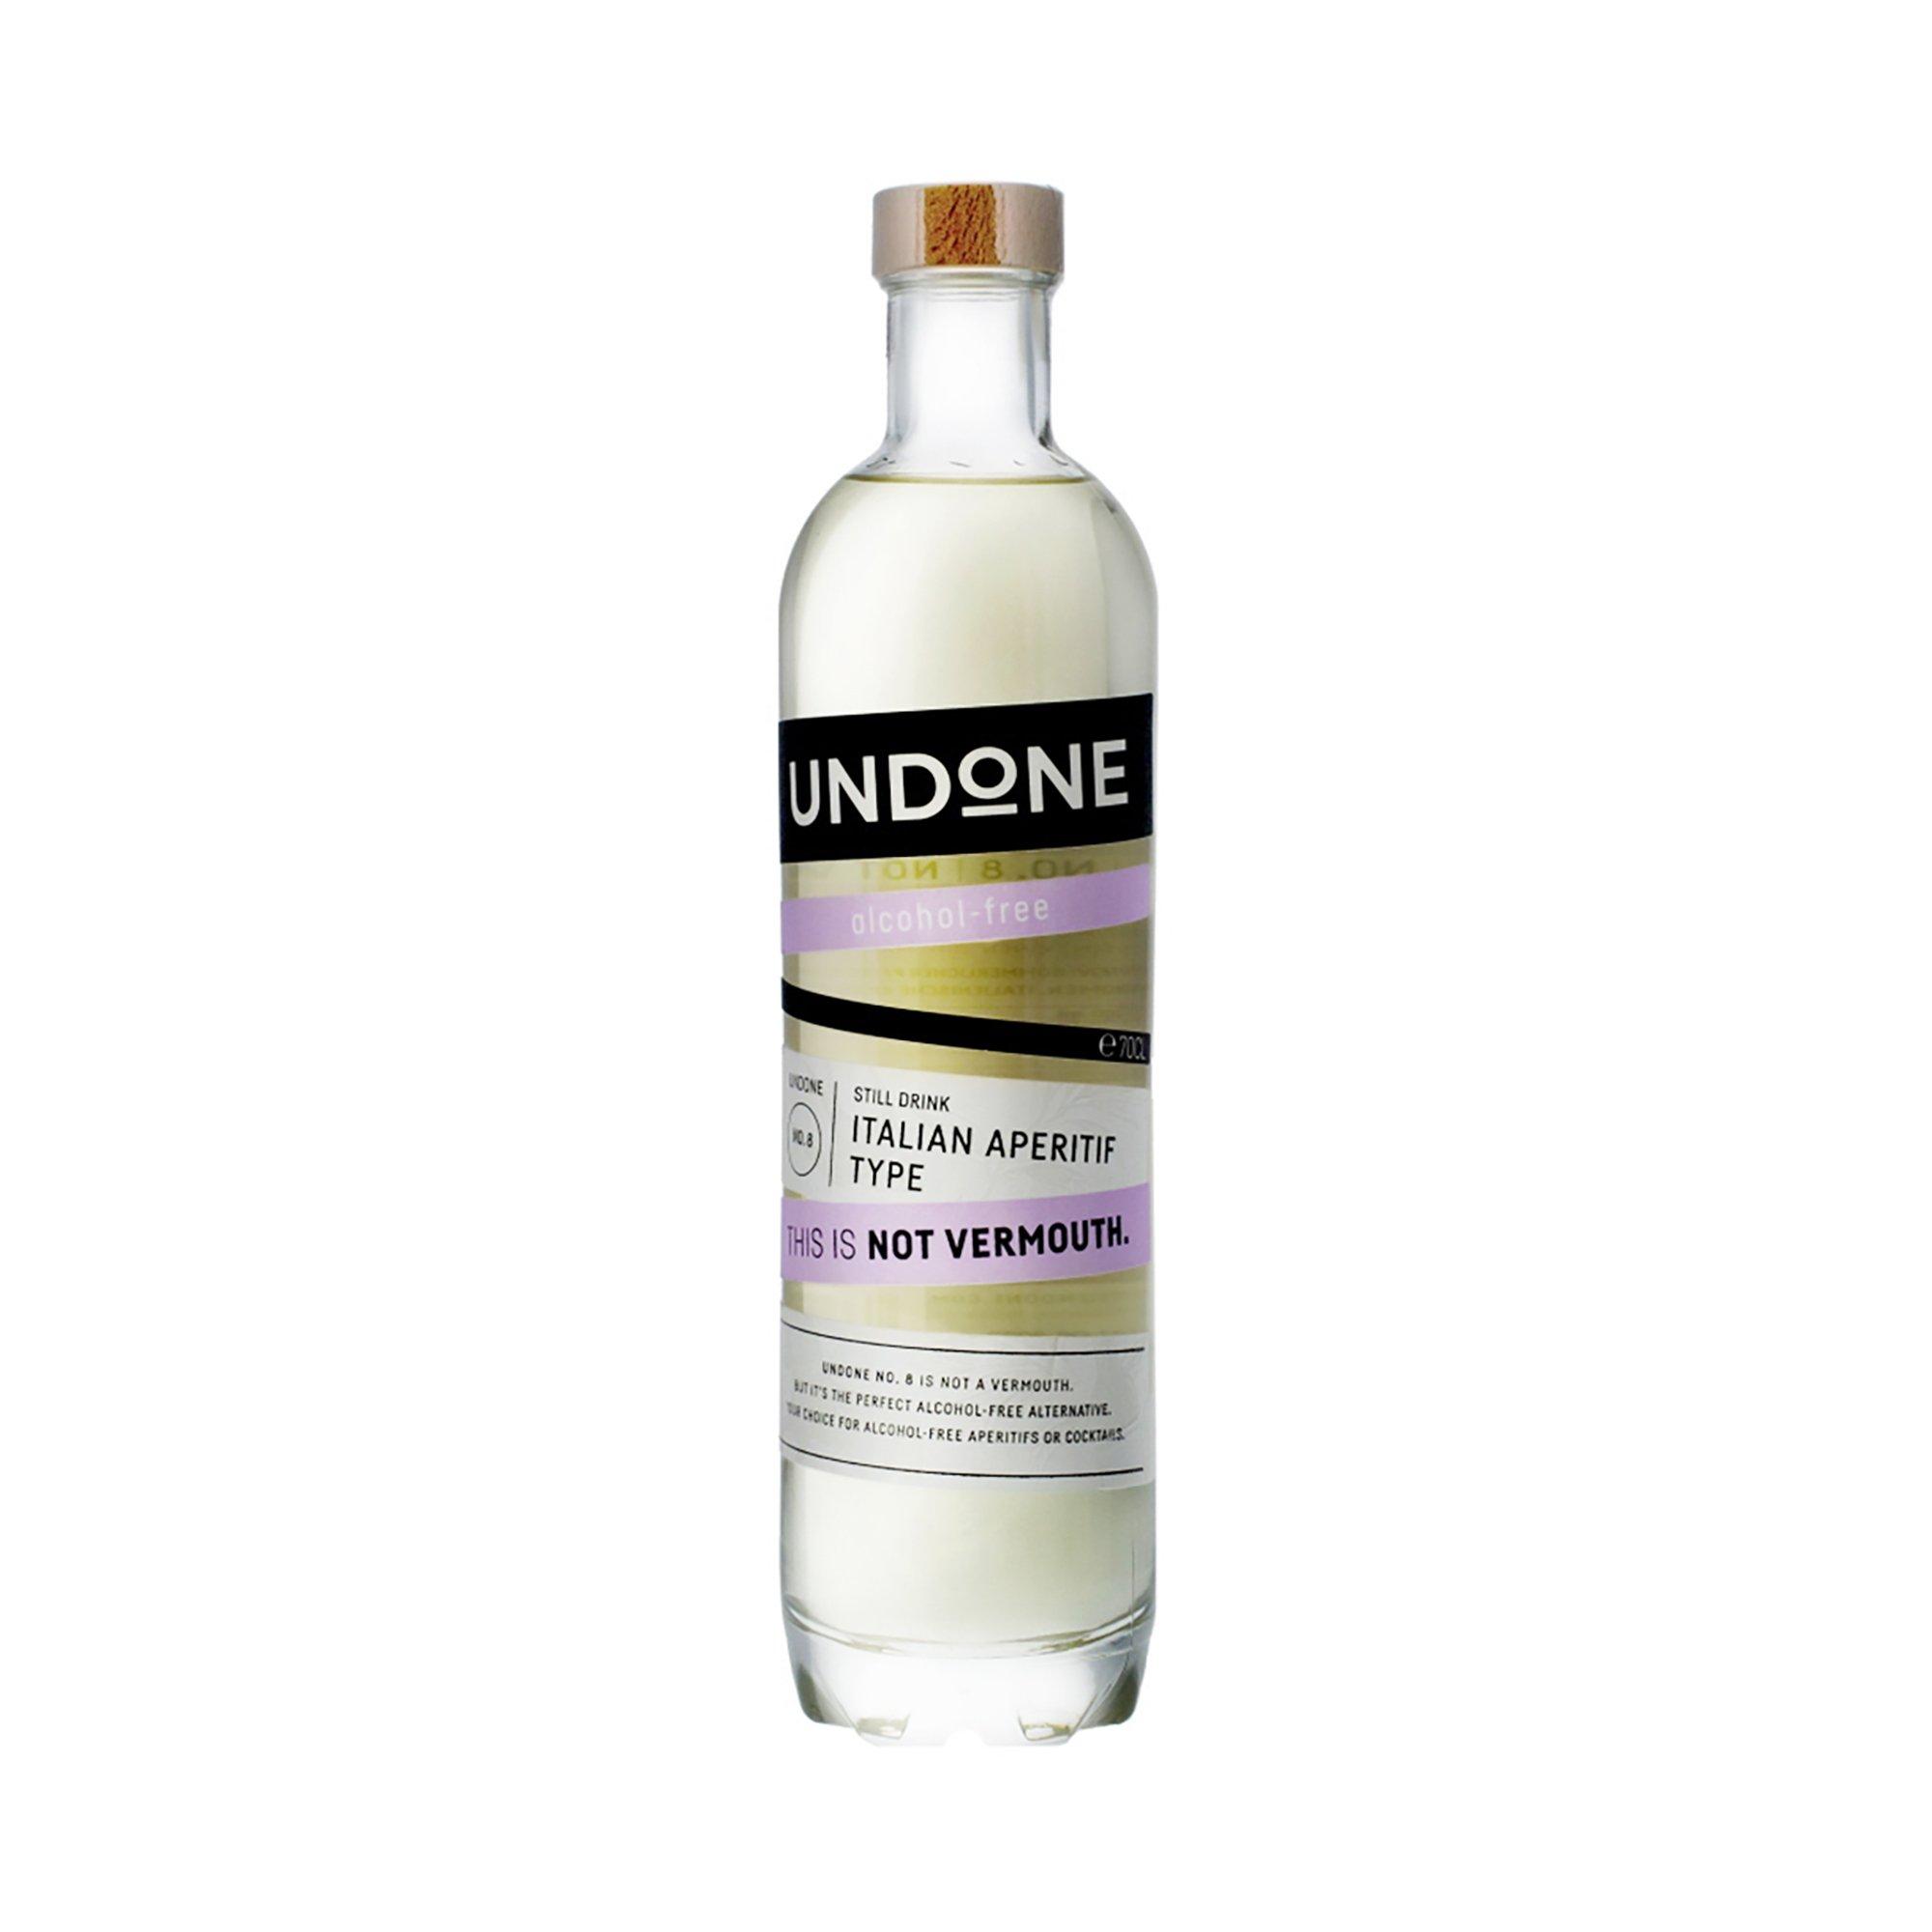 UNDONE No. 8 Aperitif alkoholfrei (Not Vermouth)  